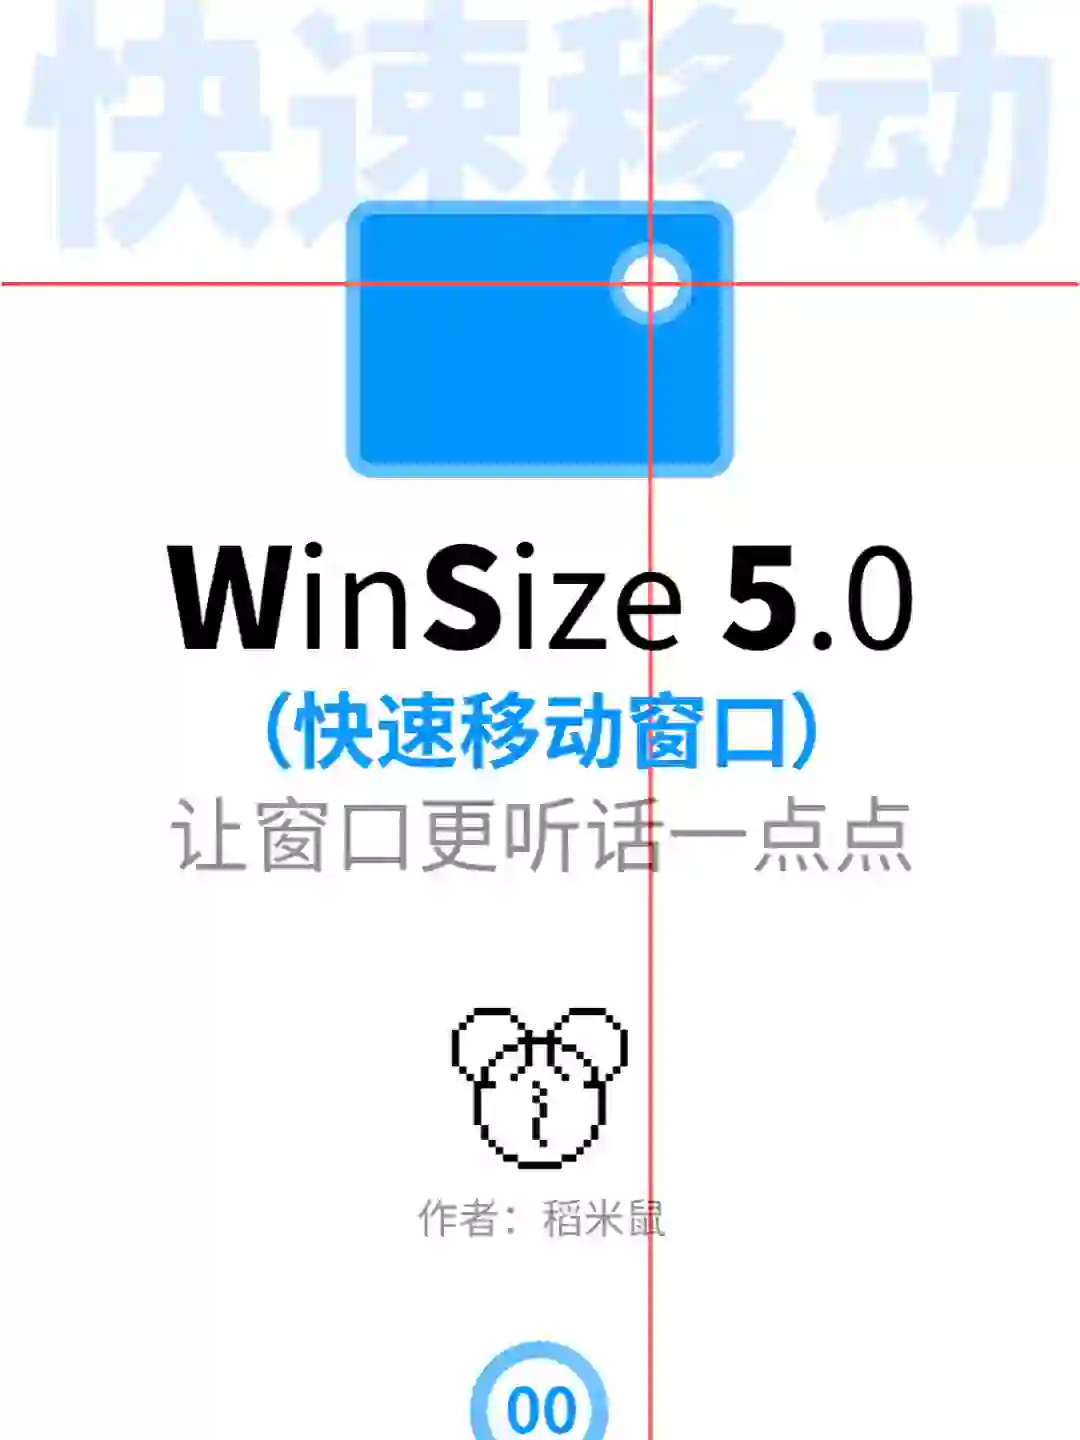 WinSize 5.0 快速移动窗口功能简介